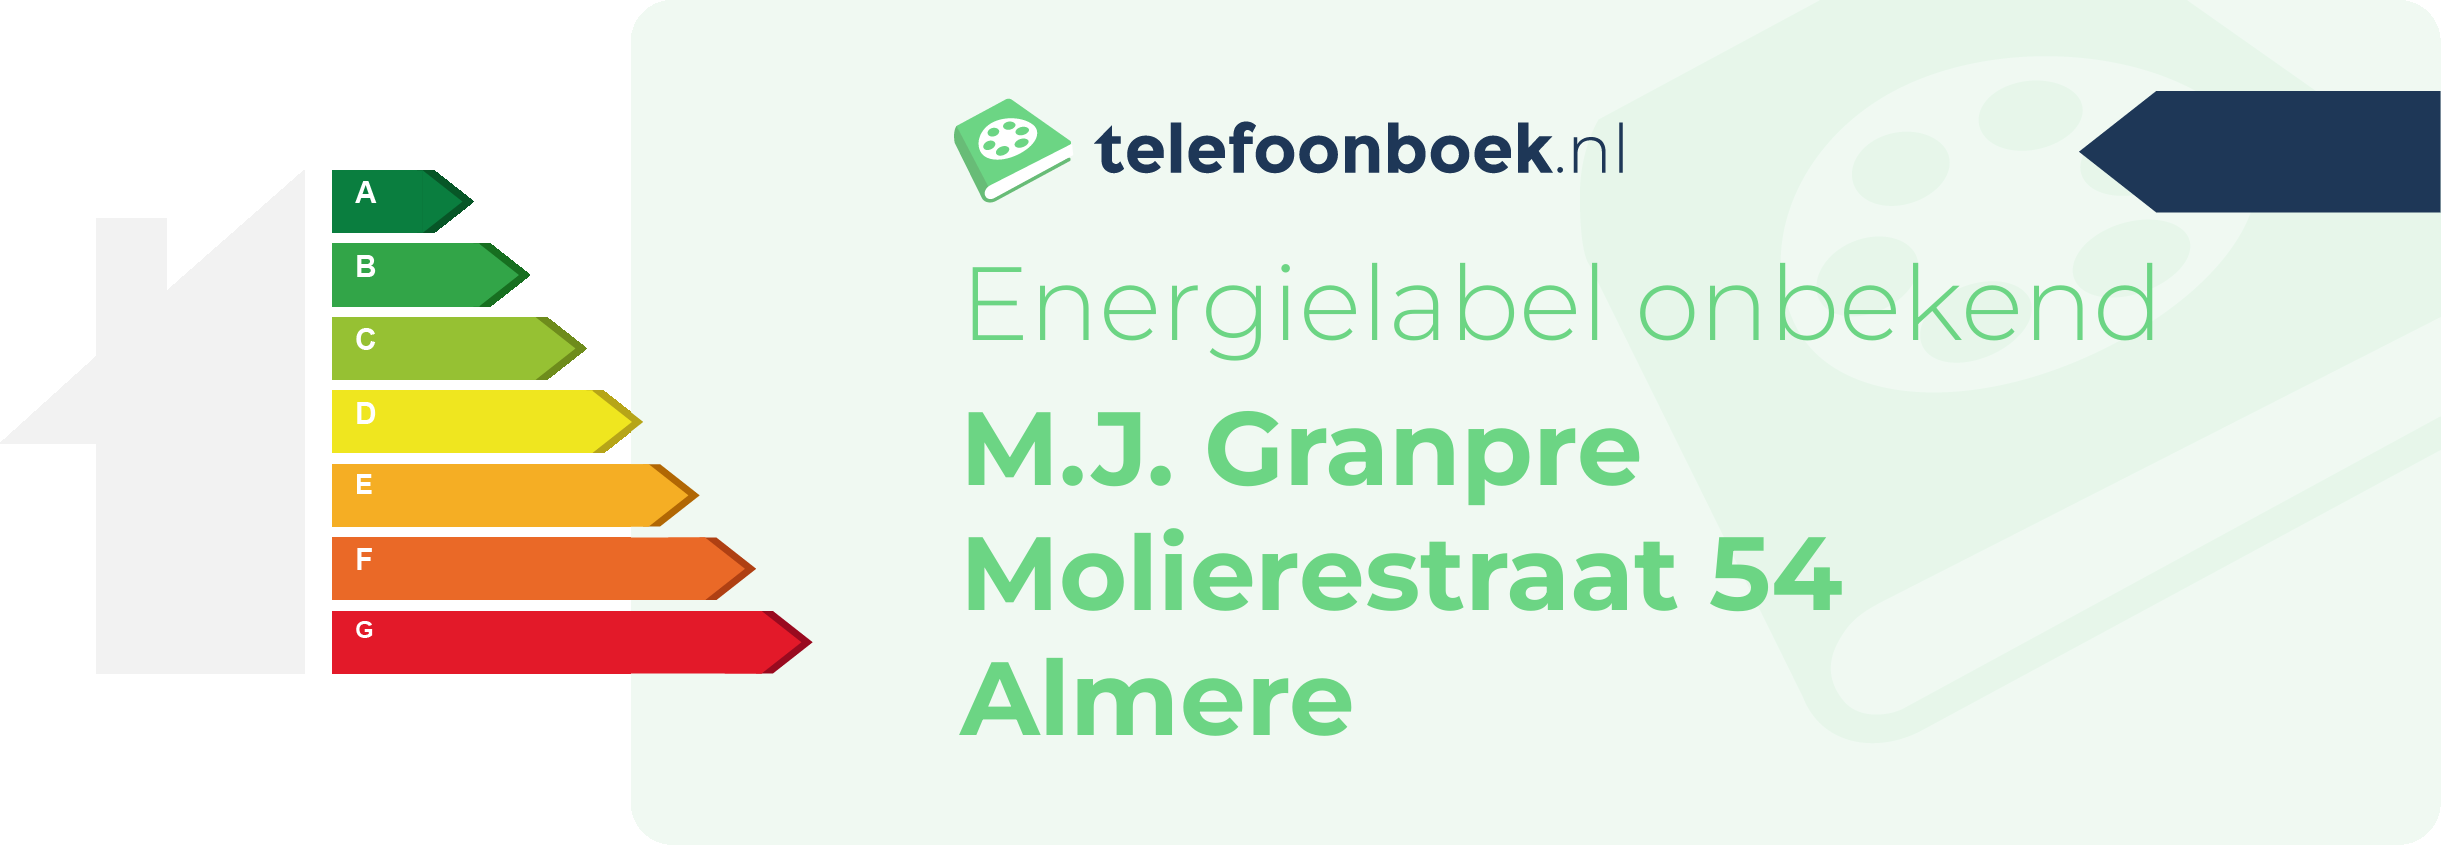 Energielabel M.J. Granpre Molierestraat 54 Almere